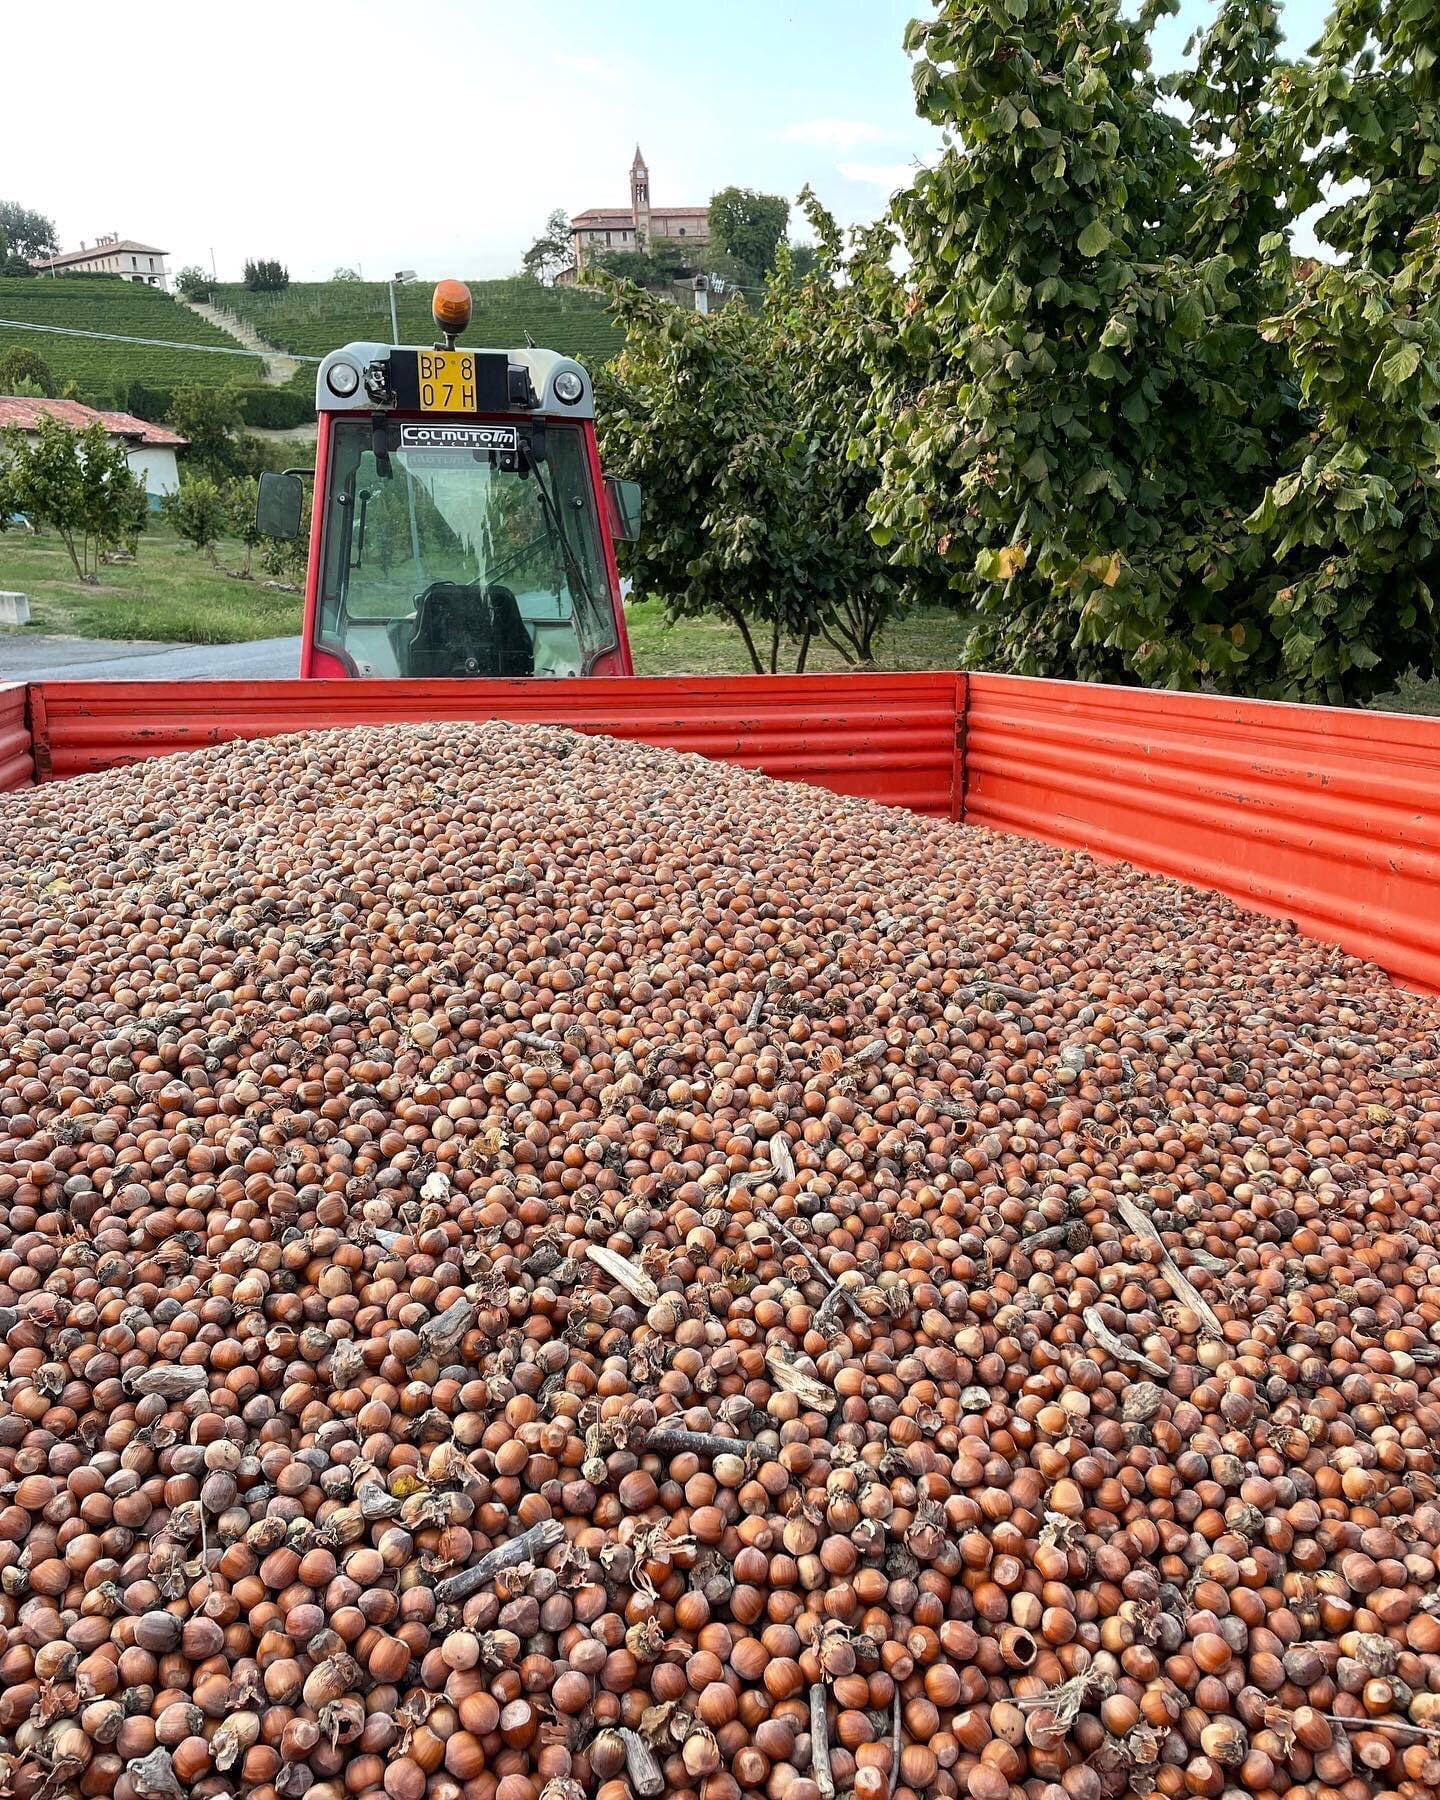 Harvest of Hazelnuts